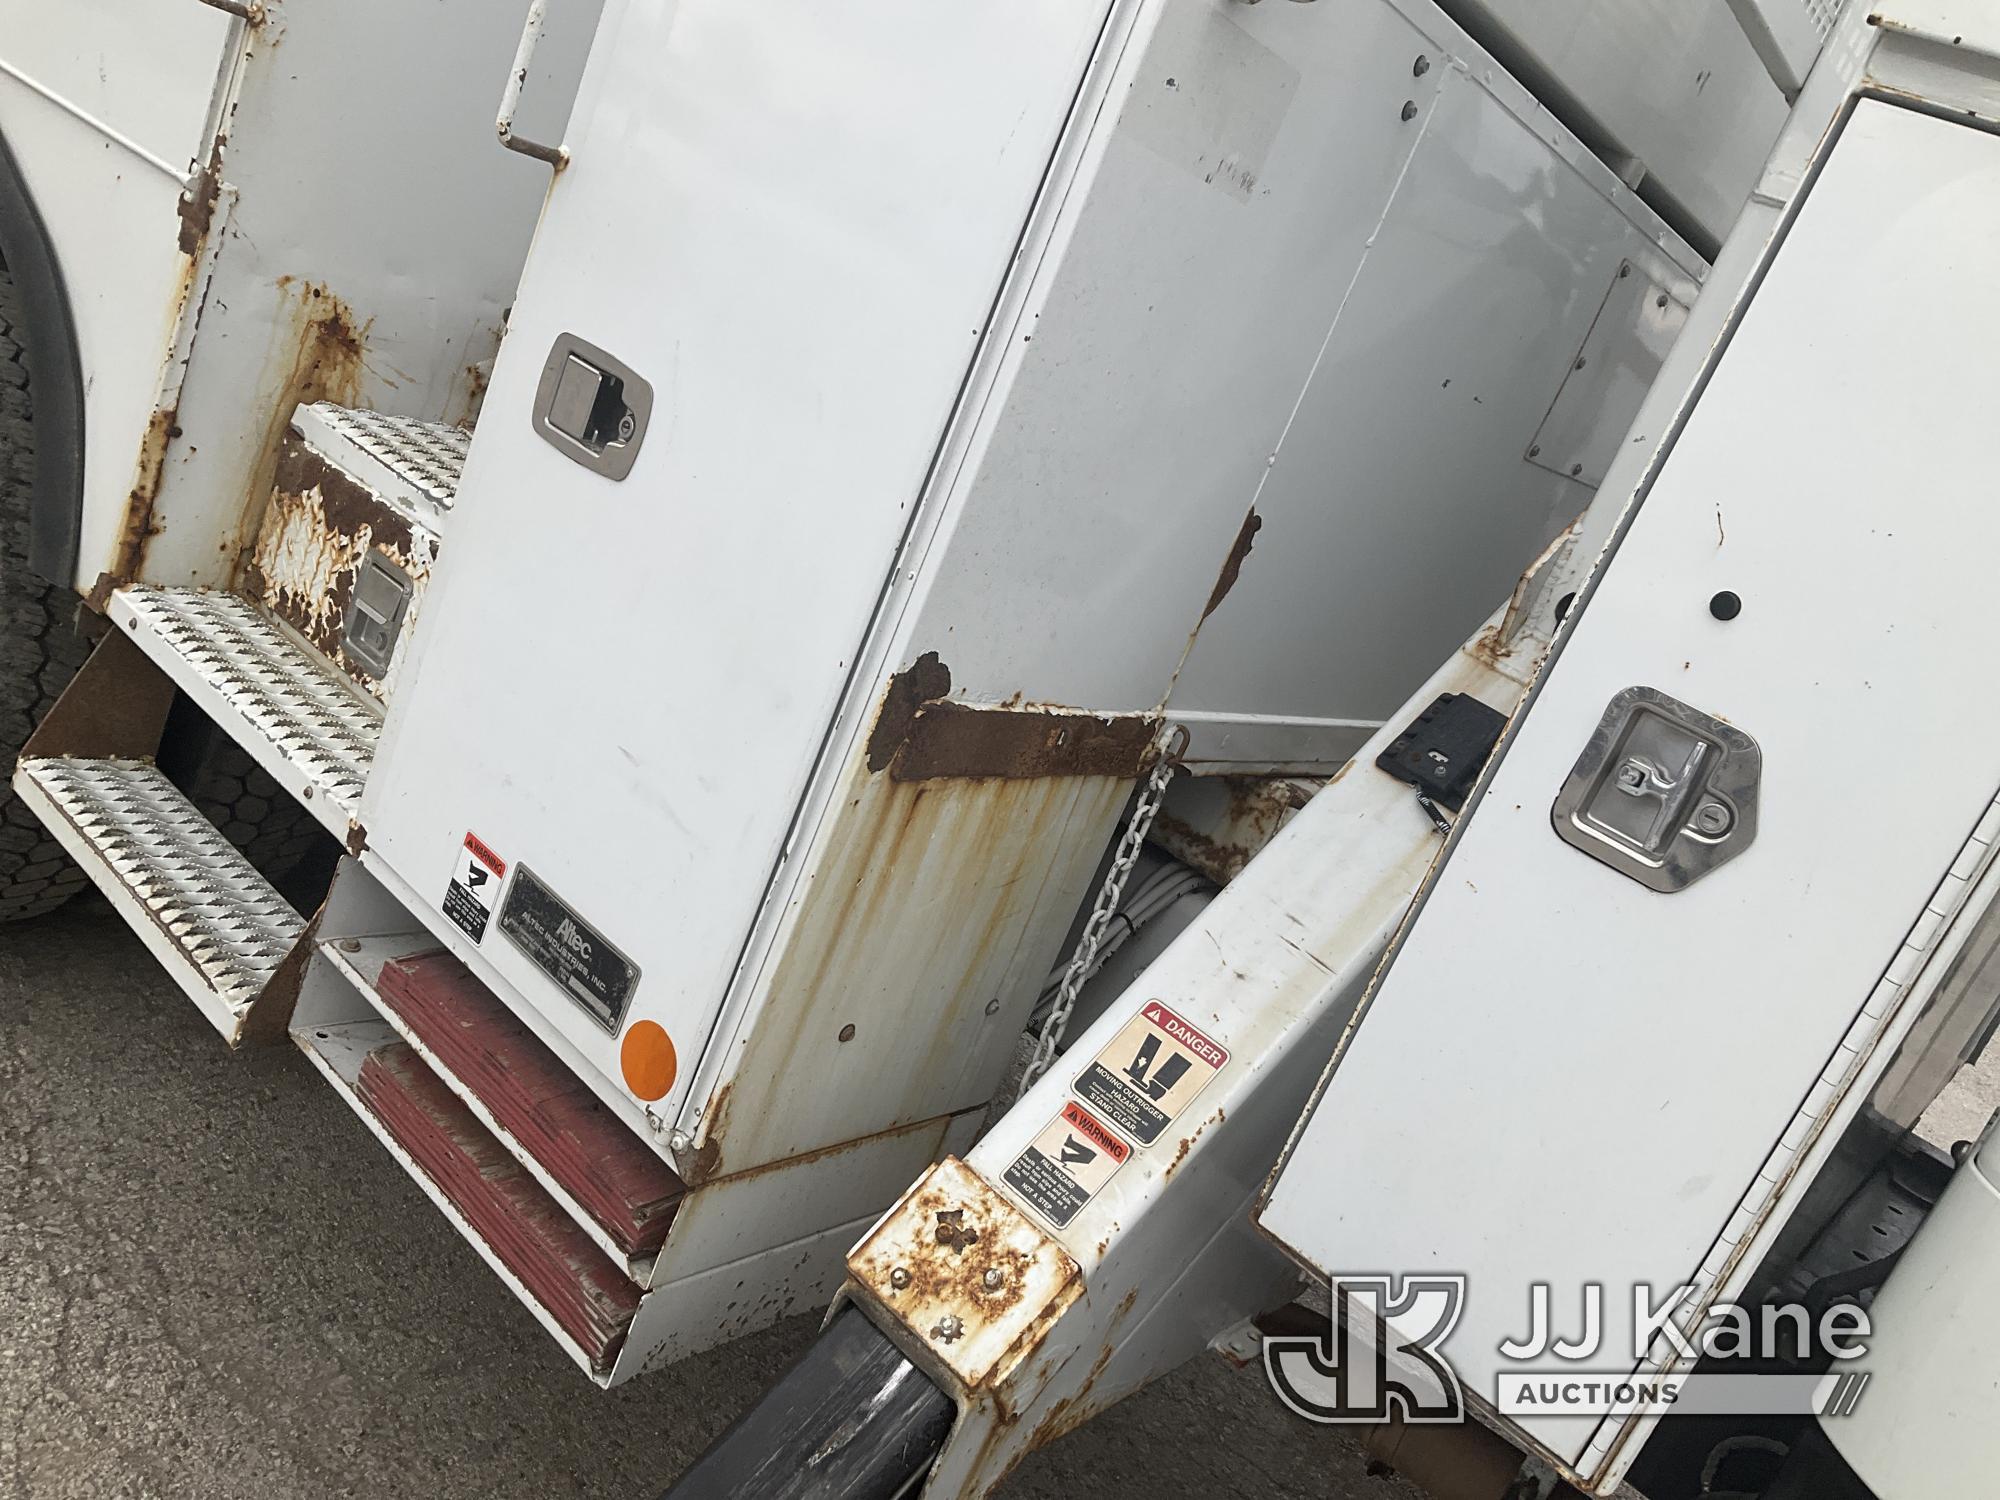 (Kansas City, MO) Altec AM55-E, Material Handling Bucket Truck rear mounted on 2013 Freightliner M2